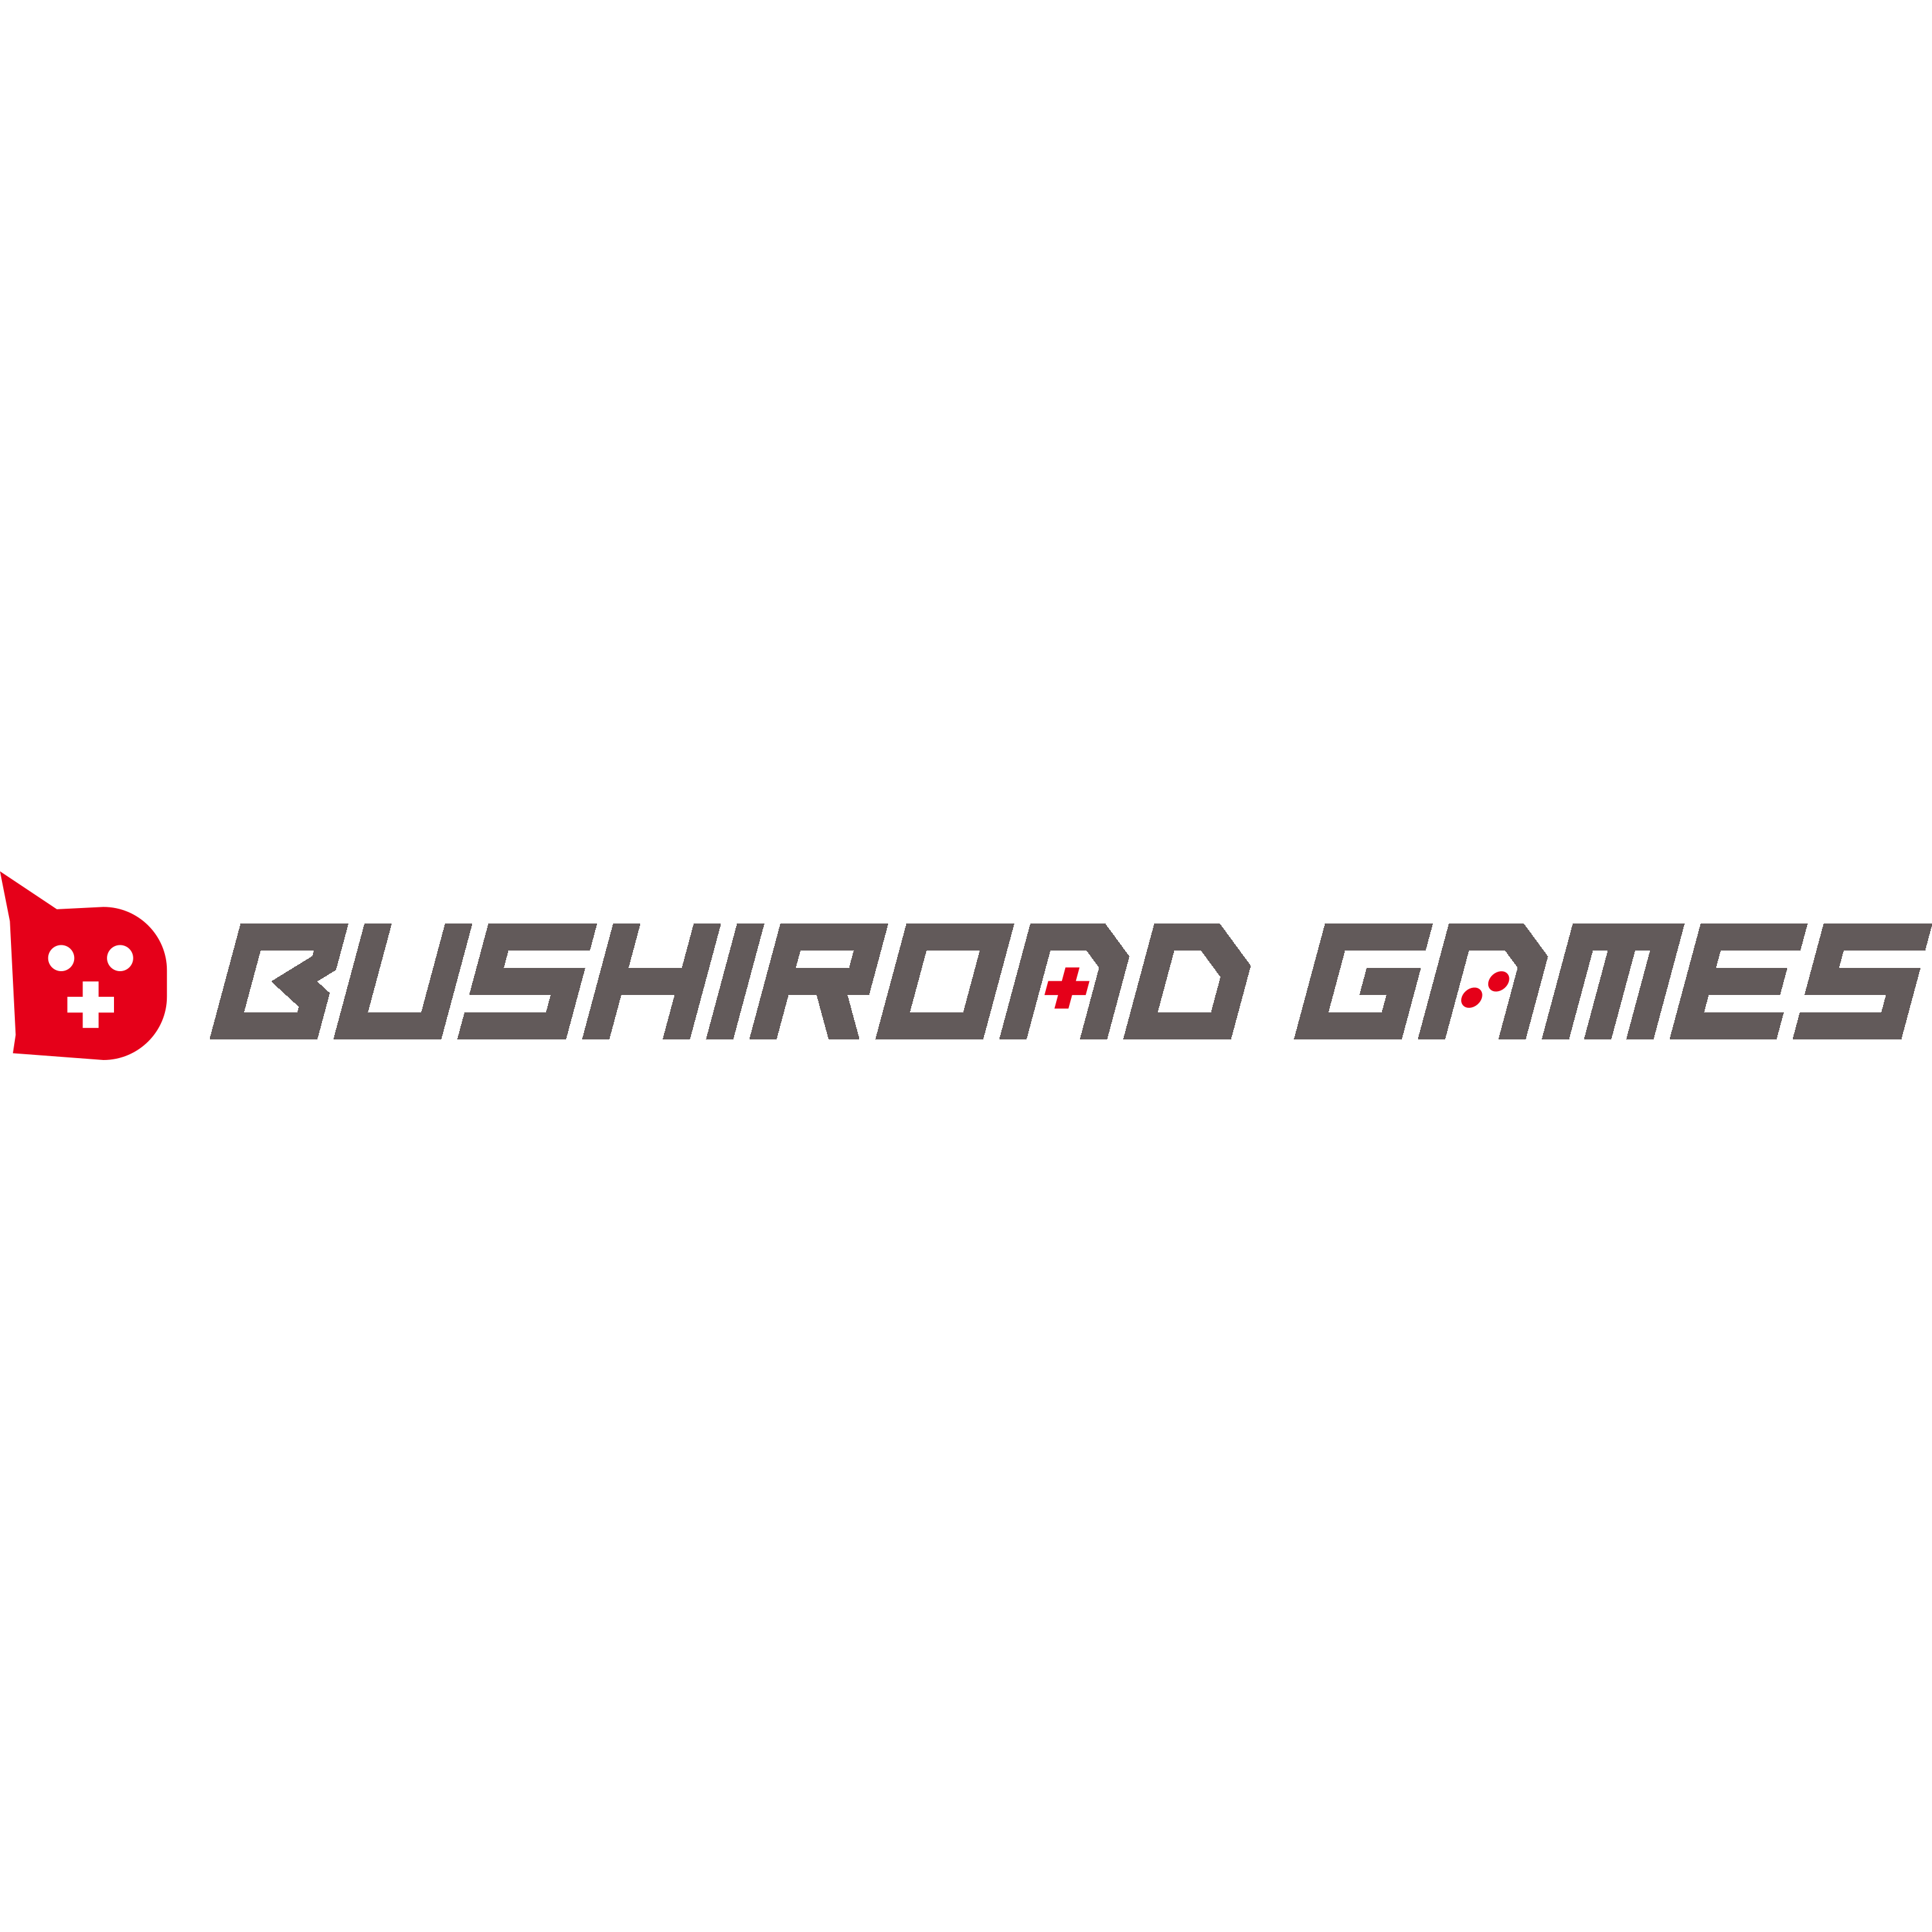 Bushiroad Games Logo Transparent Picture